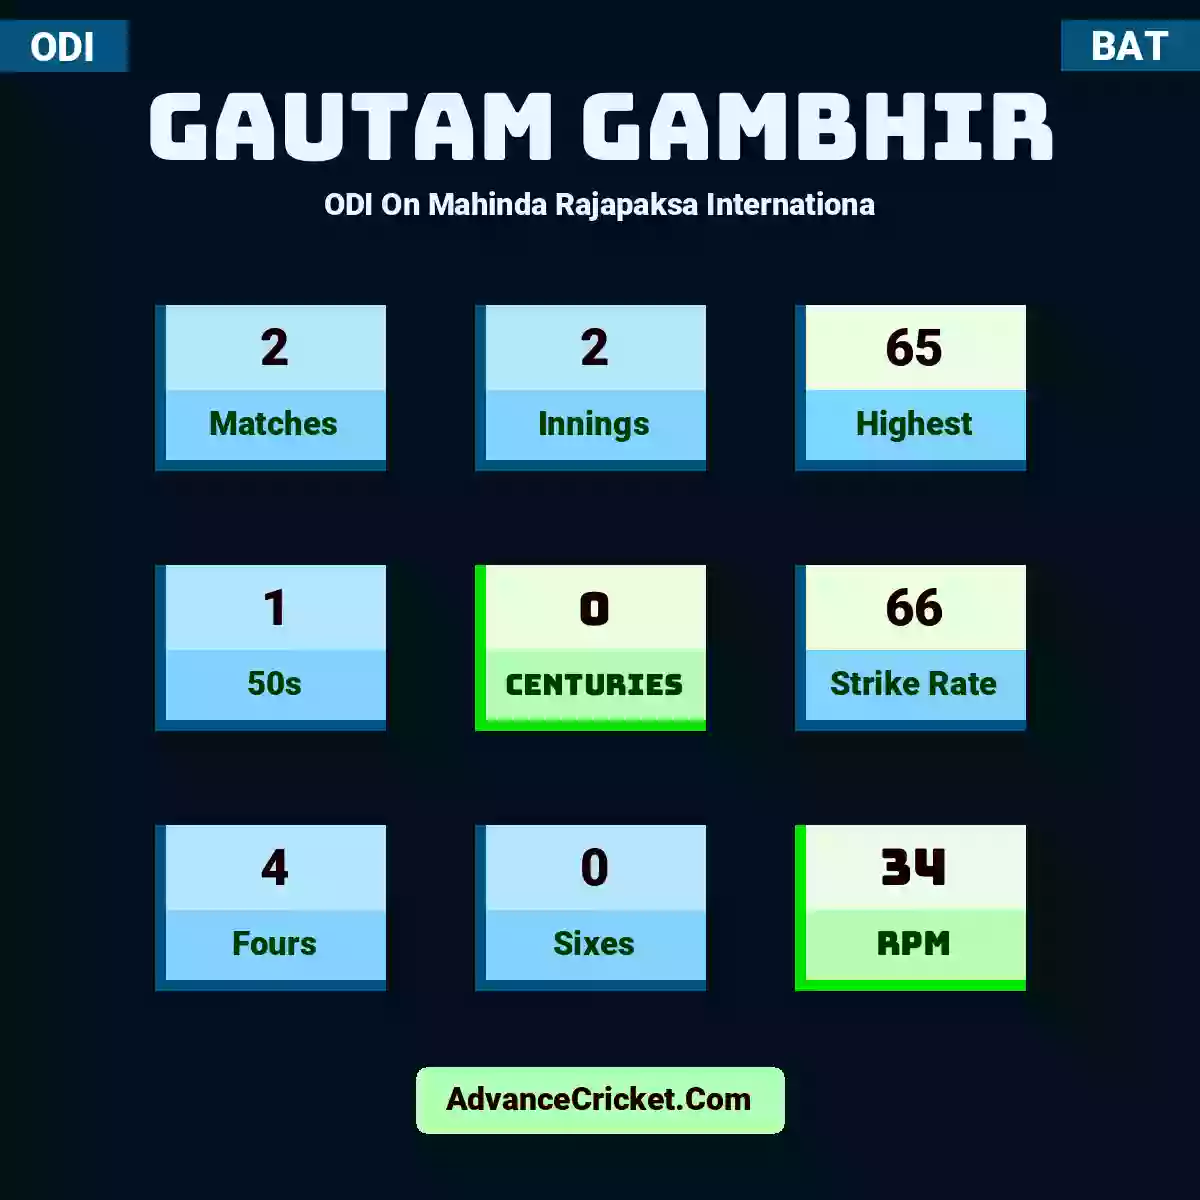 Gautam Gambhir ODI  On Mahinda Rajapaksa Internationa, Gautam Gambhir played 2 matches, scored 65 runs as highest, 1 half-centuries, and 0 centuries, with a strike rate of 66. G.Gambhir hit 4 fours and 0 sixes, with an RPM of 34.